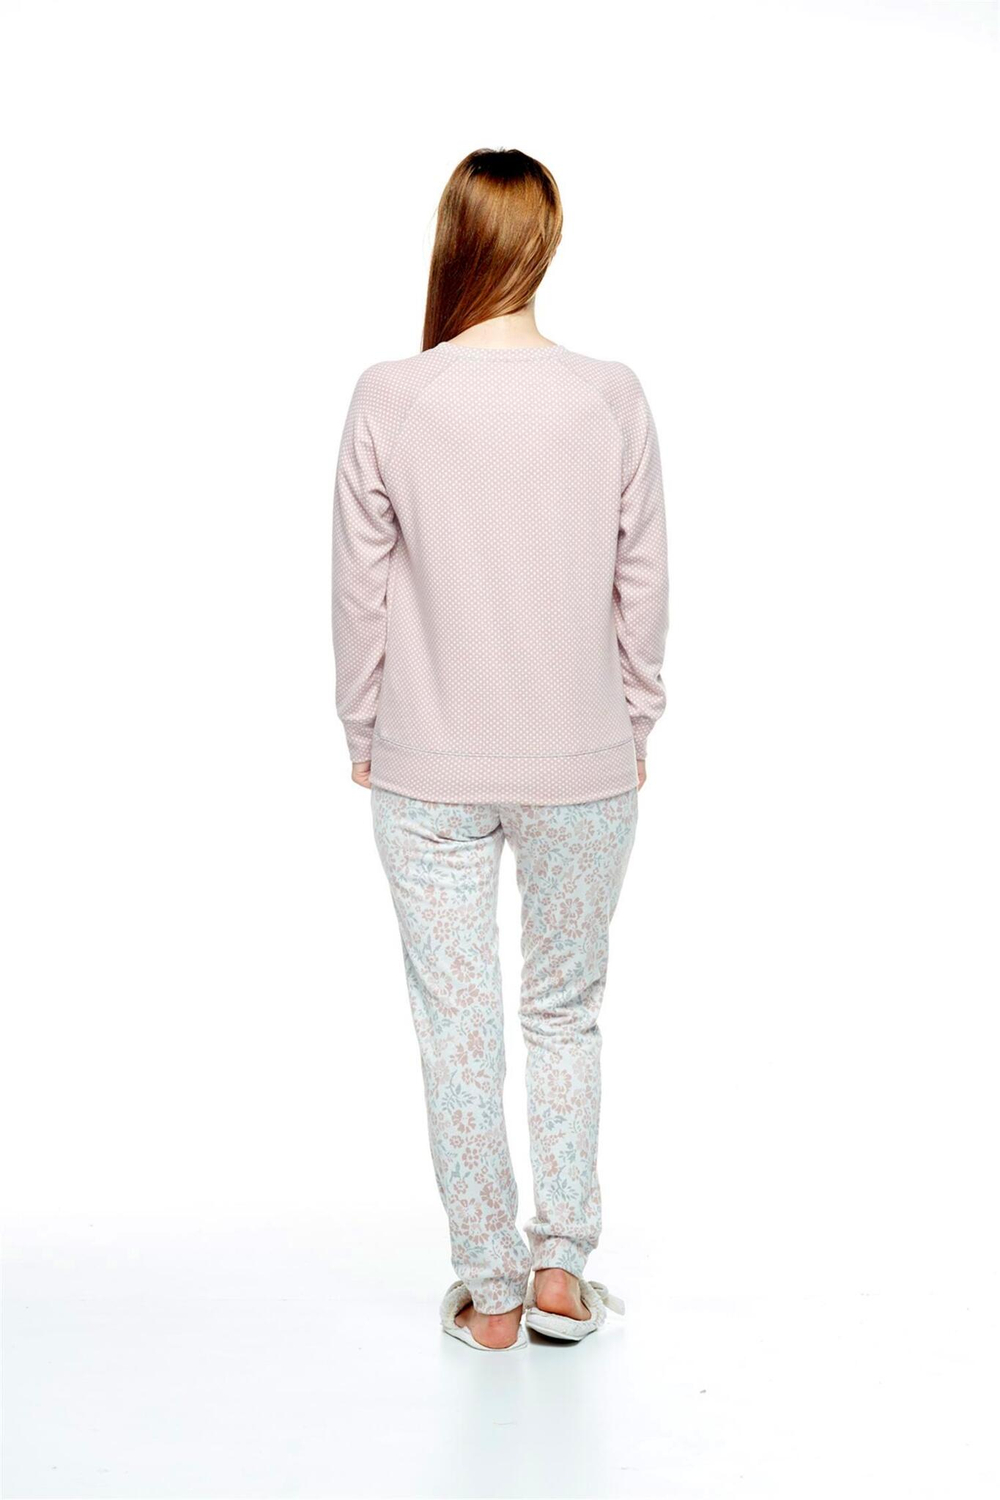 RELAX MODE - Женская пижама с брюками - 10007